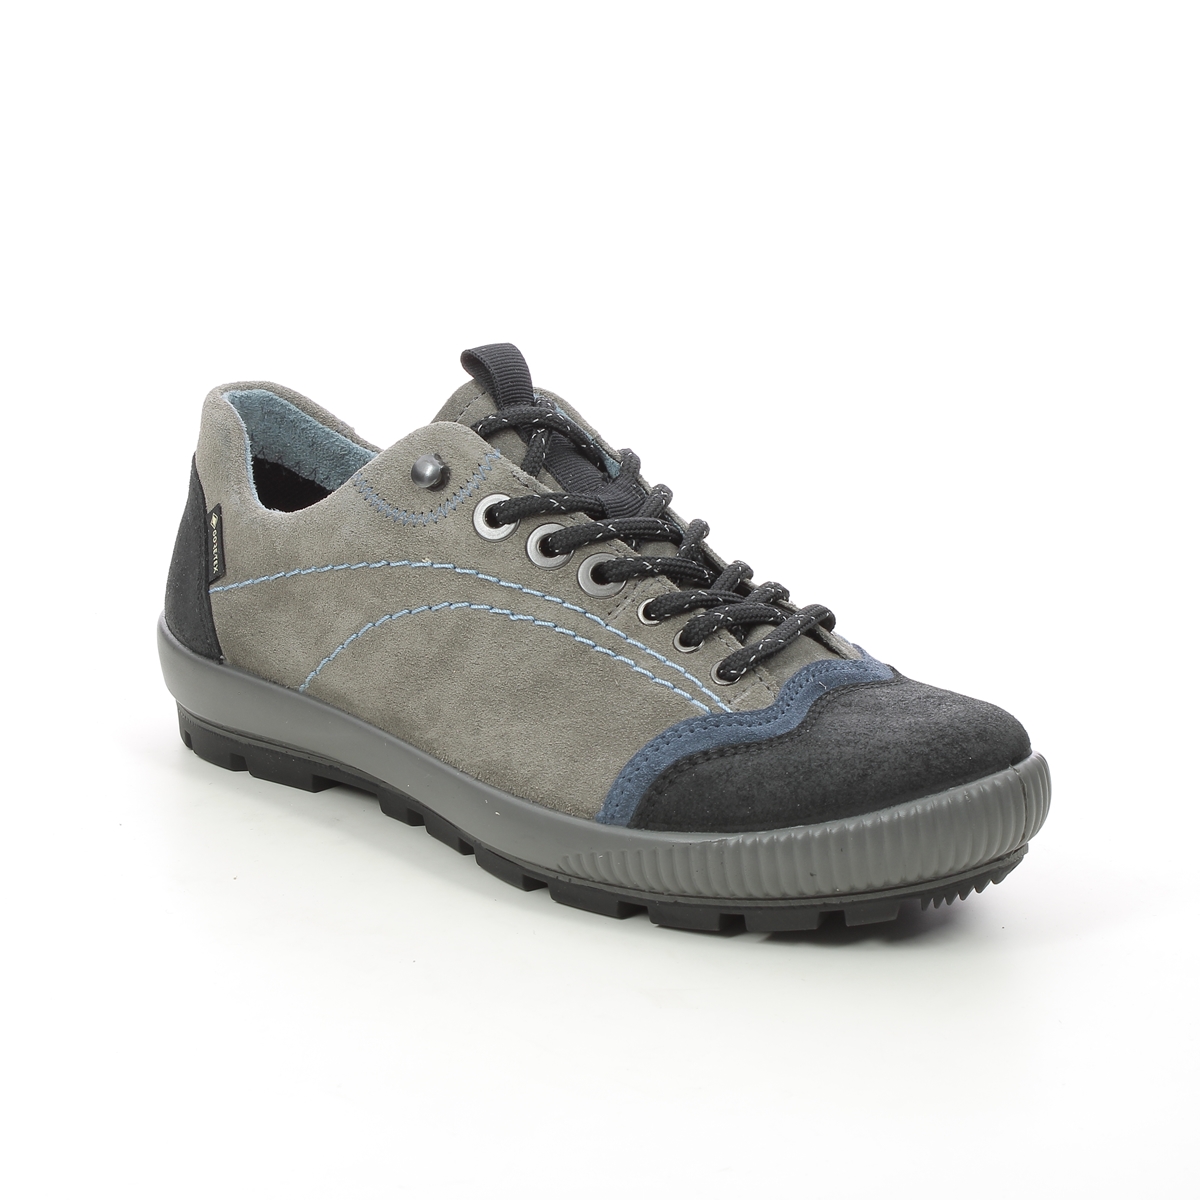 Legero Tanaro Trek Gtx Grey Suede Womens Walking Shoes 2000122-2800 In Size 8 In Plain Grey Suede